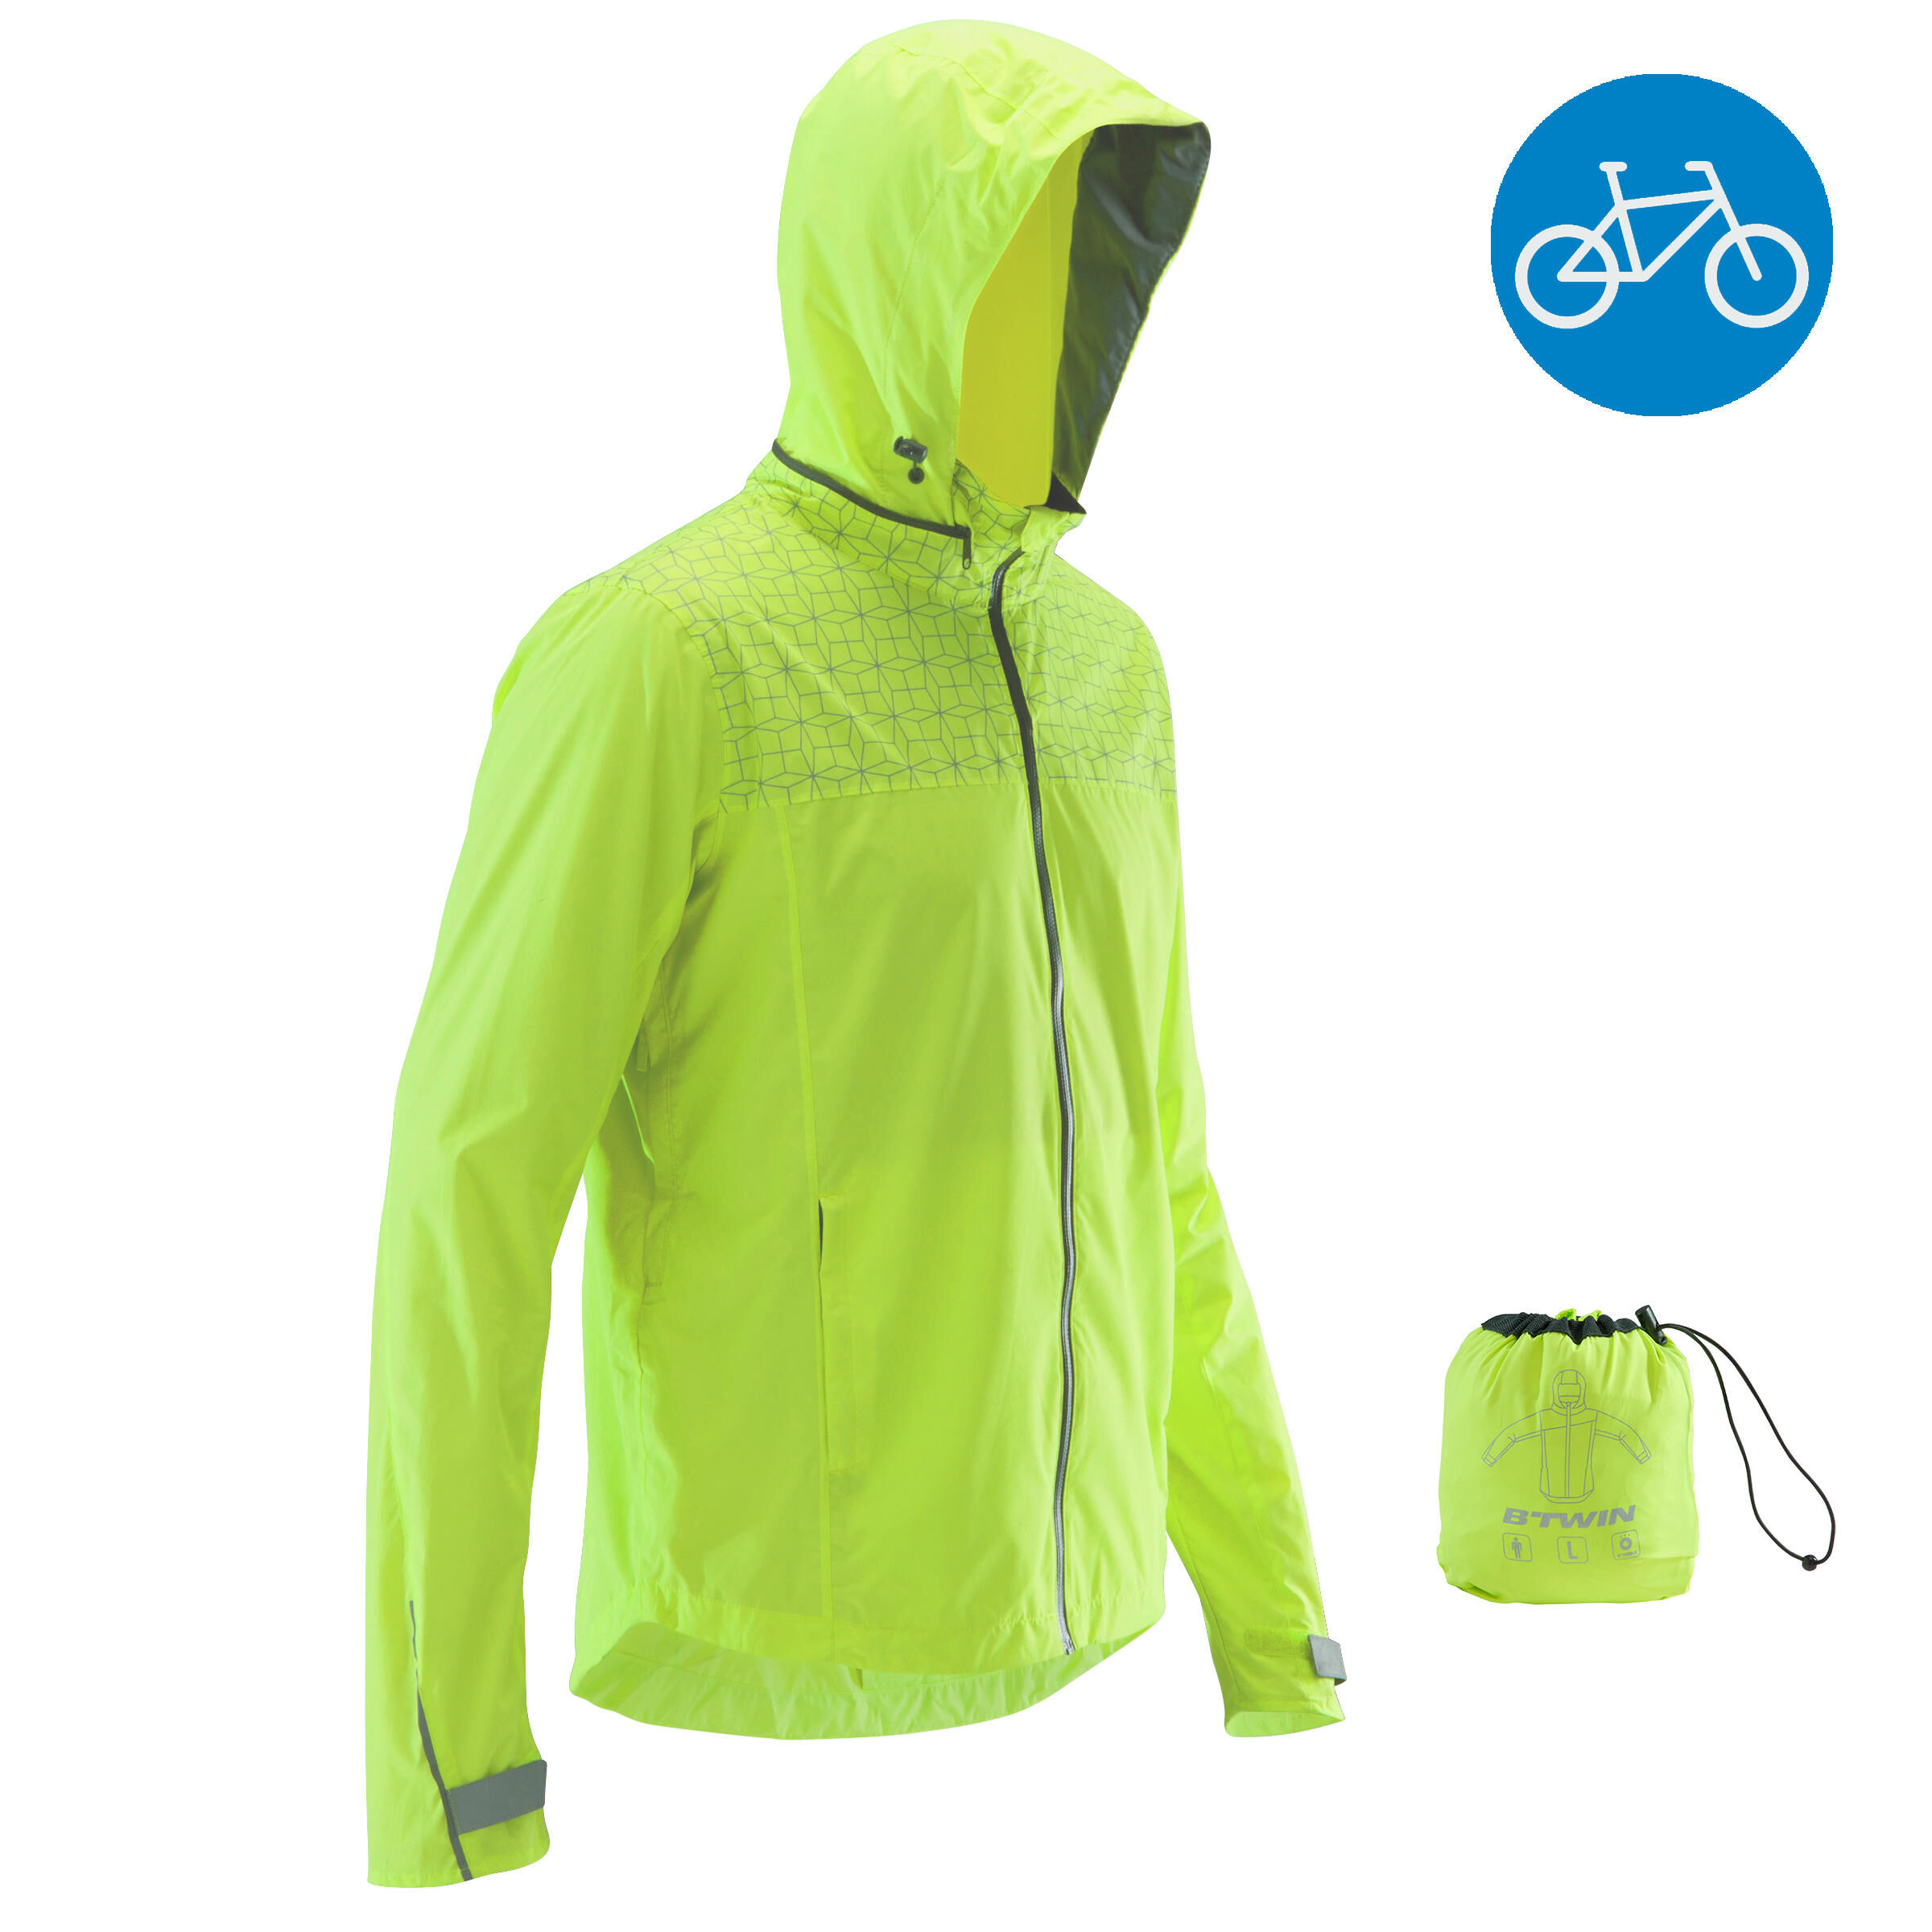 BTWIN 500 Cycling Rain Jacket - Neon Yellow